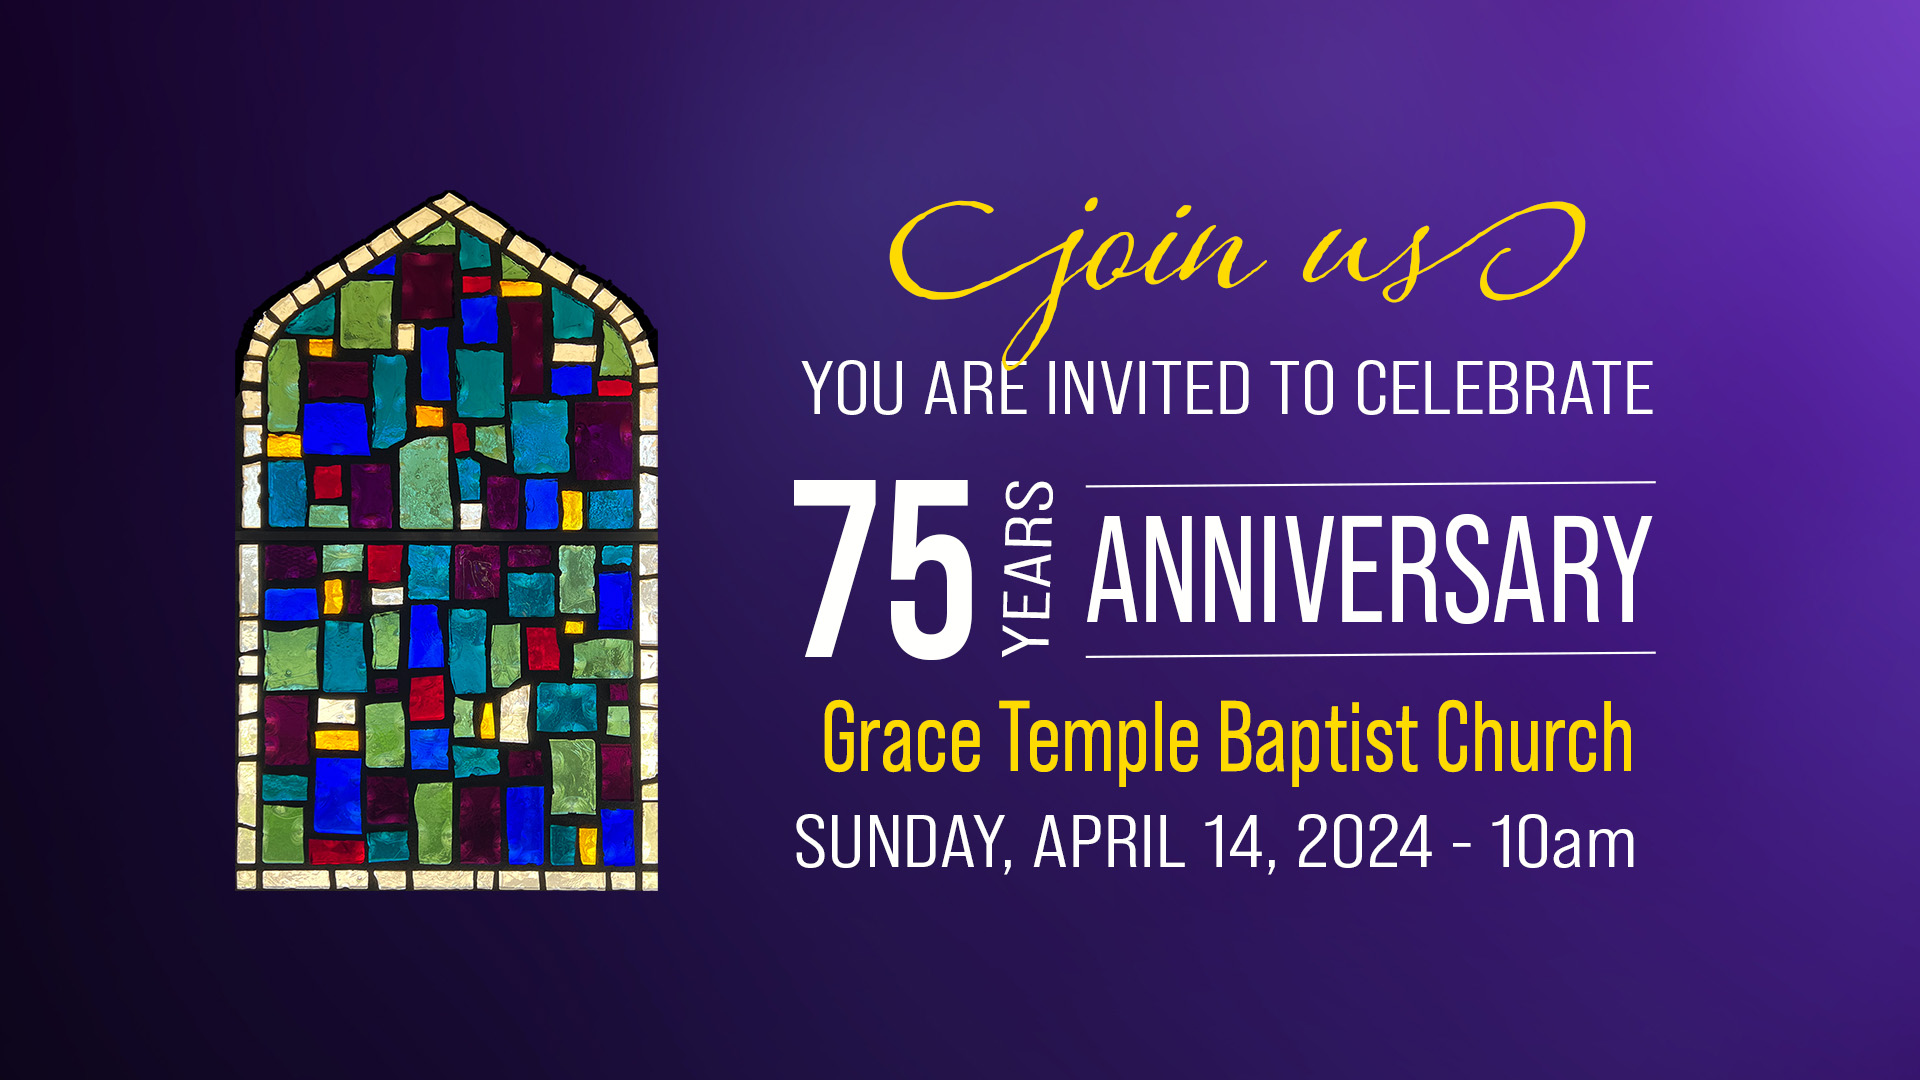 Grace Temple Baptist Church - Anniversary Celebration